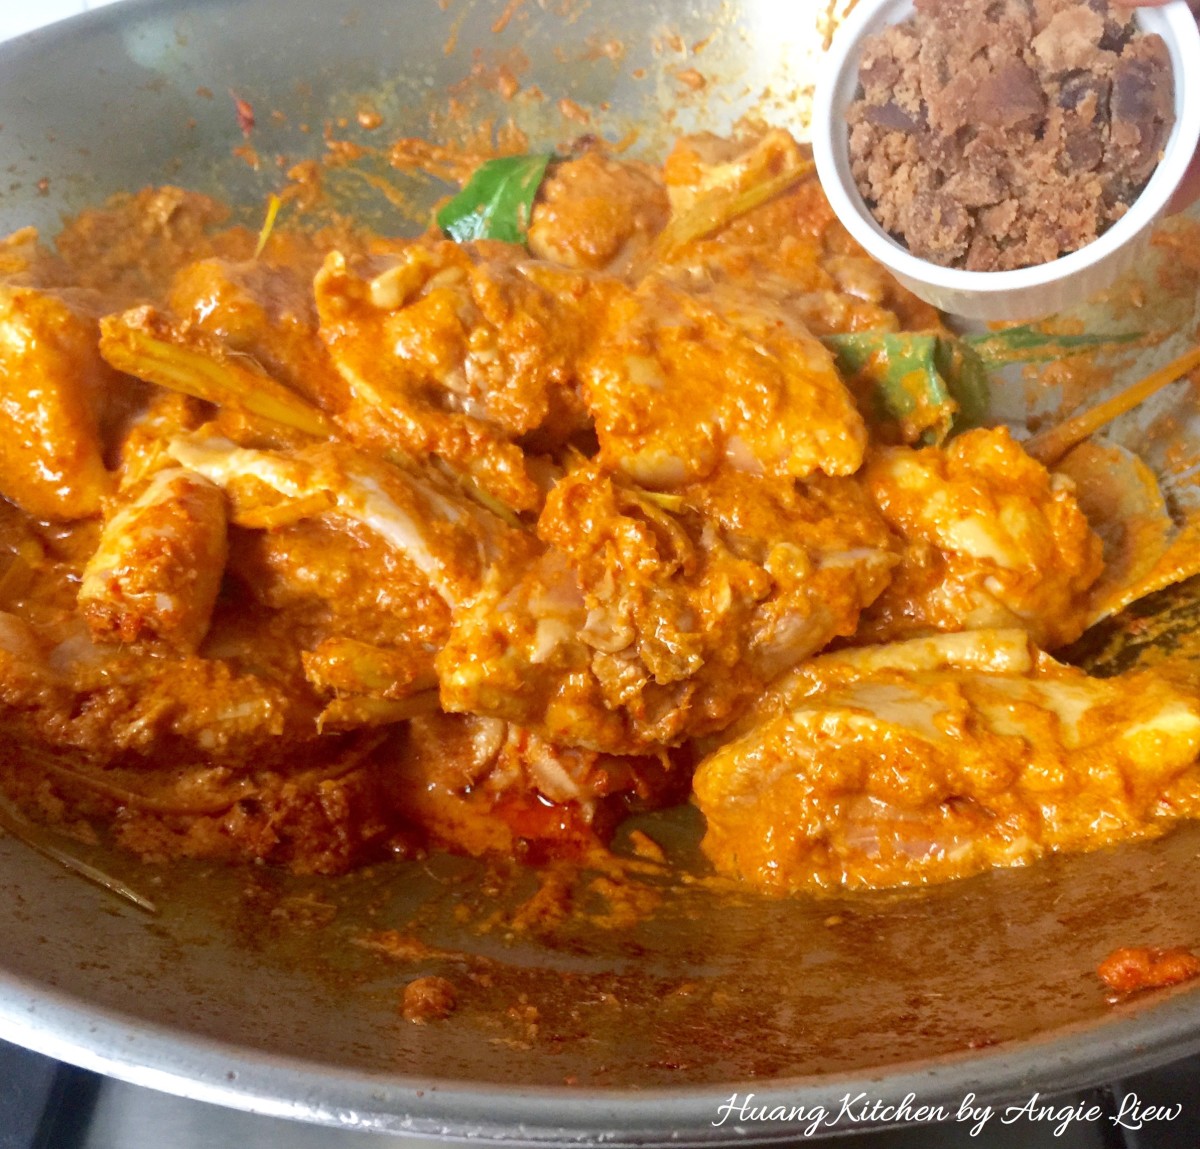 Traditional Malaysian Chicken Rendang recipe - add palm sugar